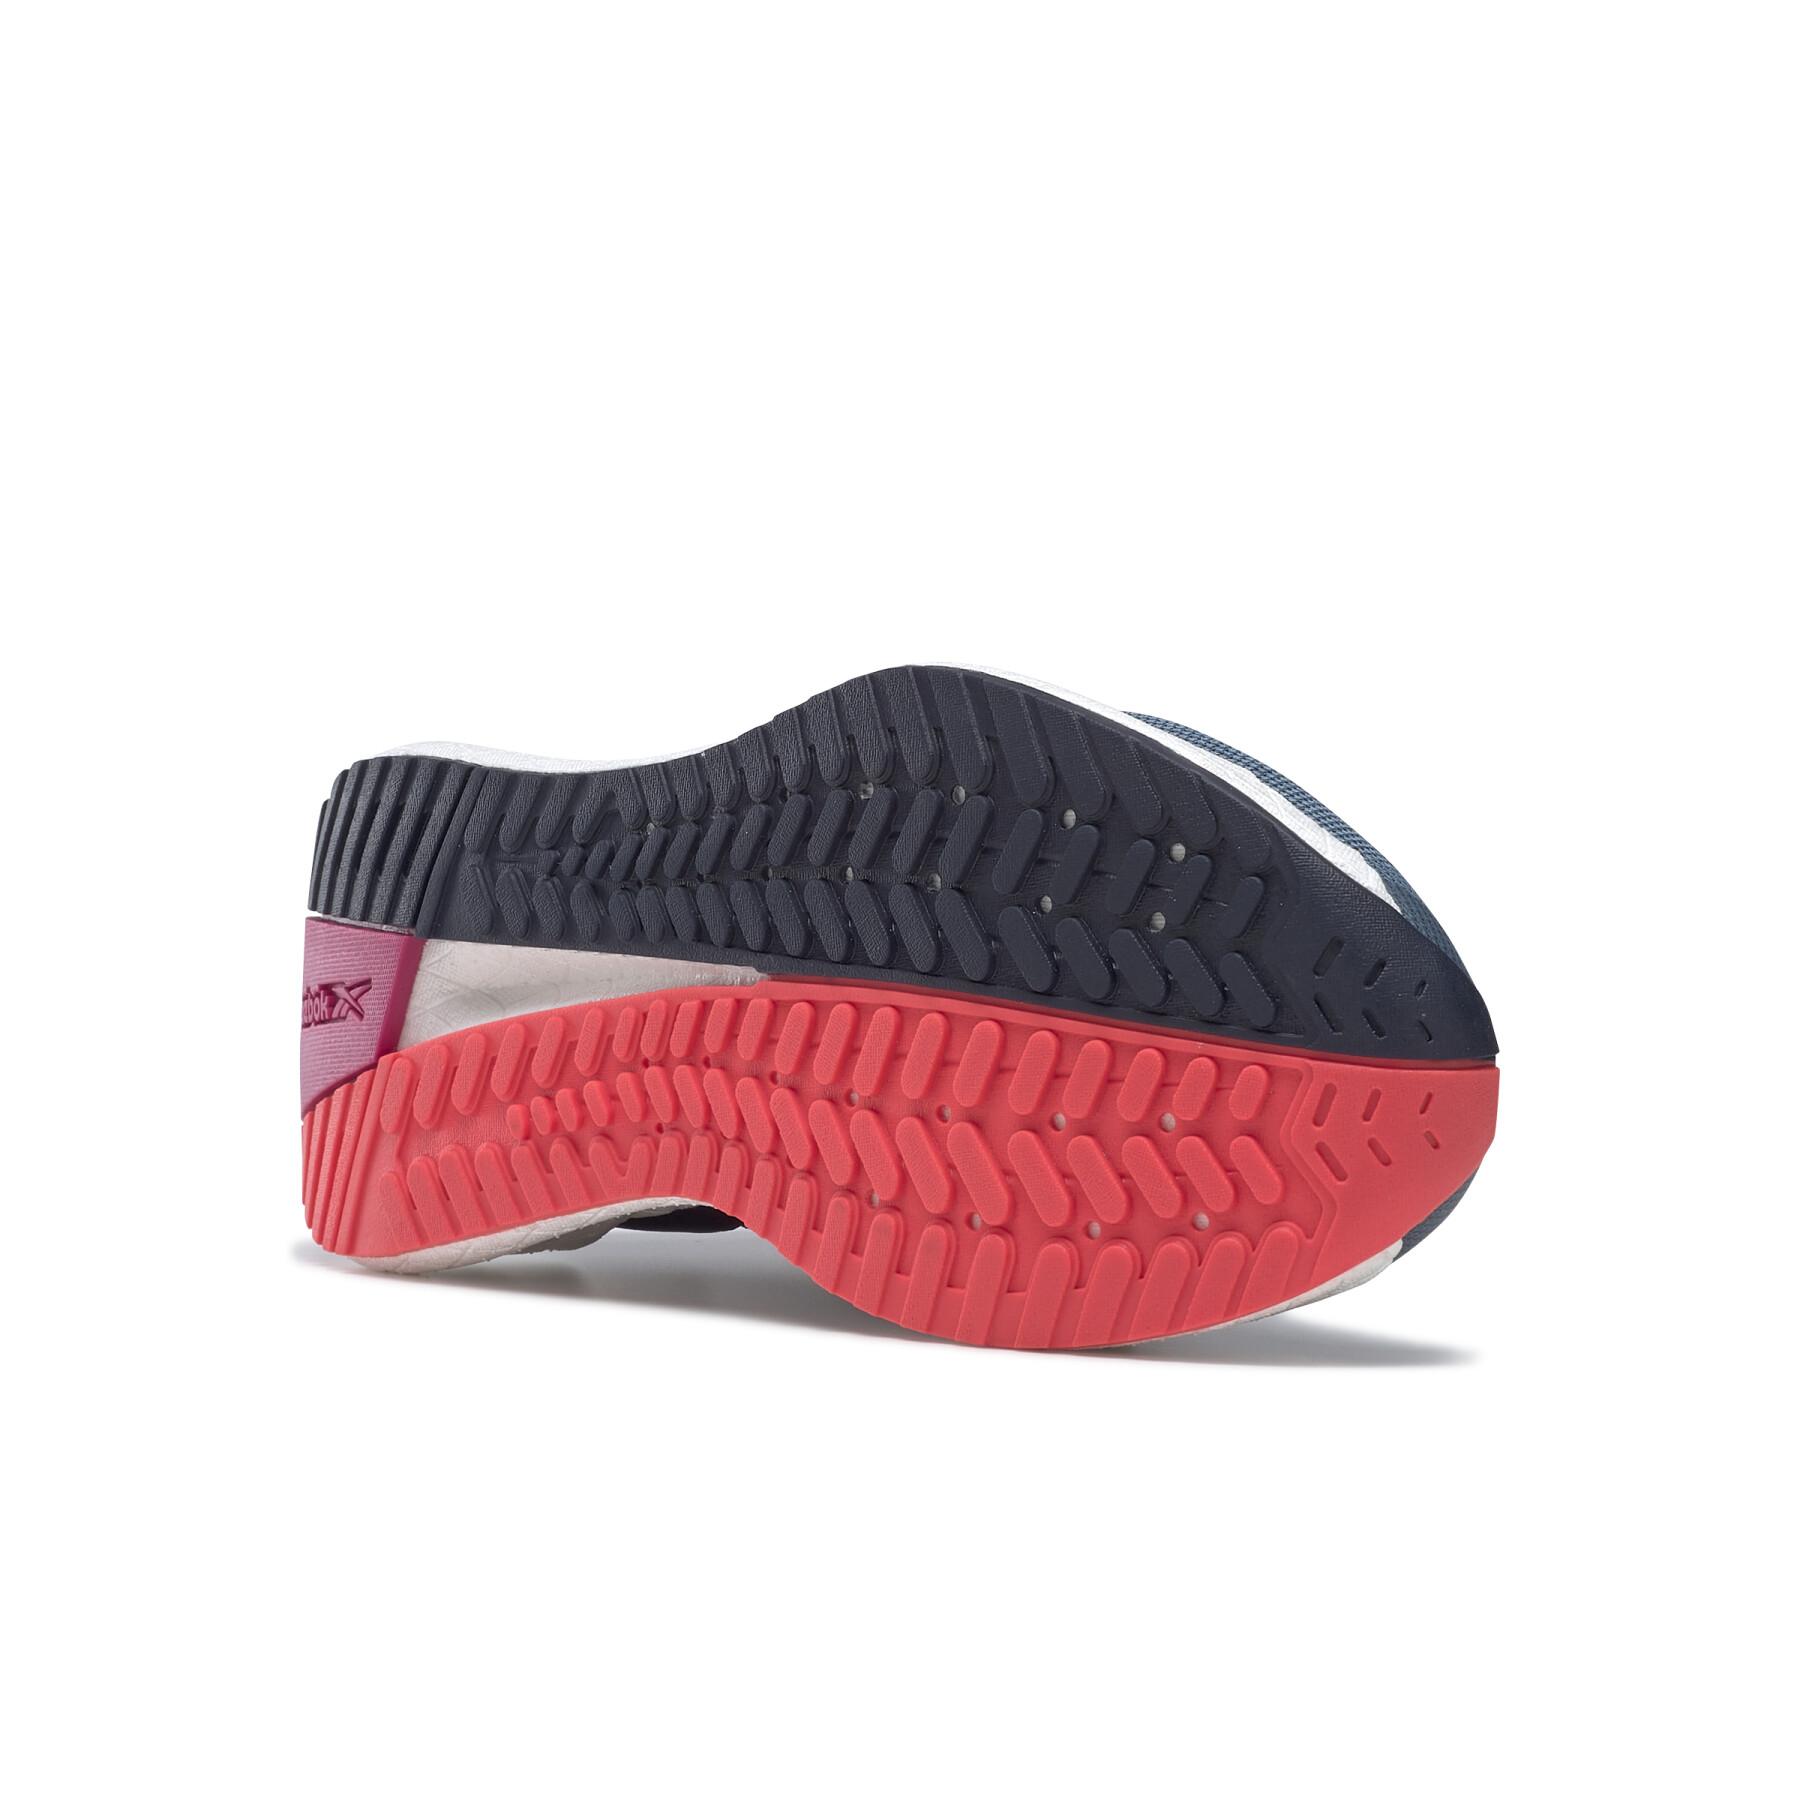 Schuhe für Frauen Reebok Floatride Energy Symmetros